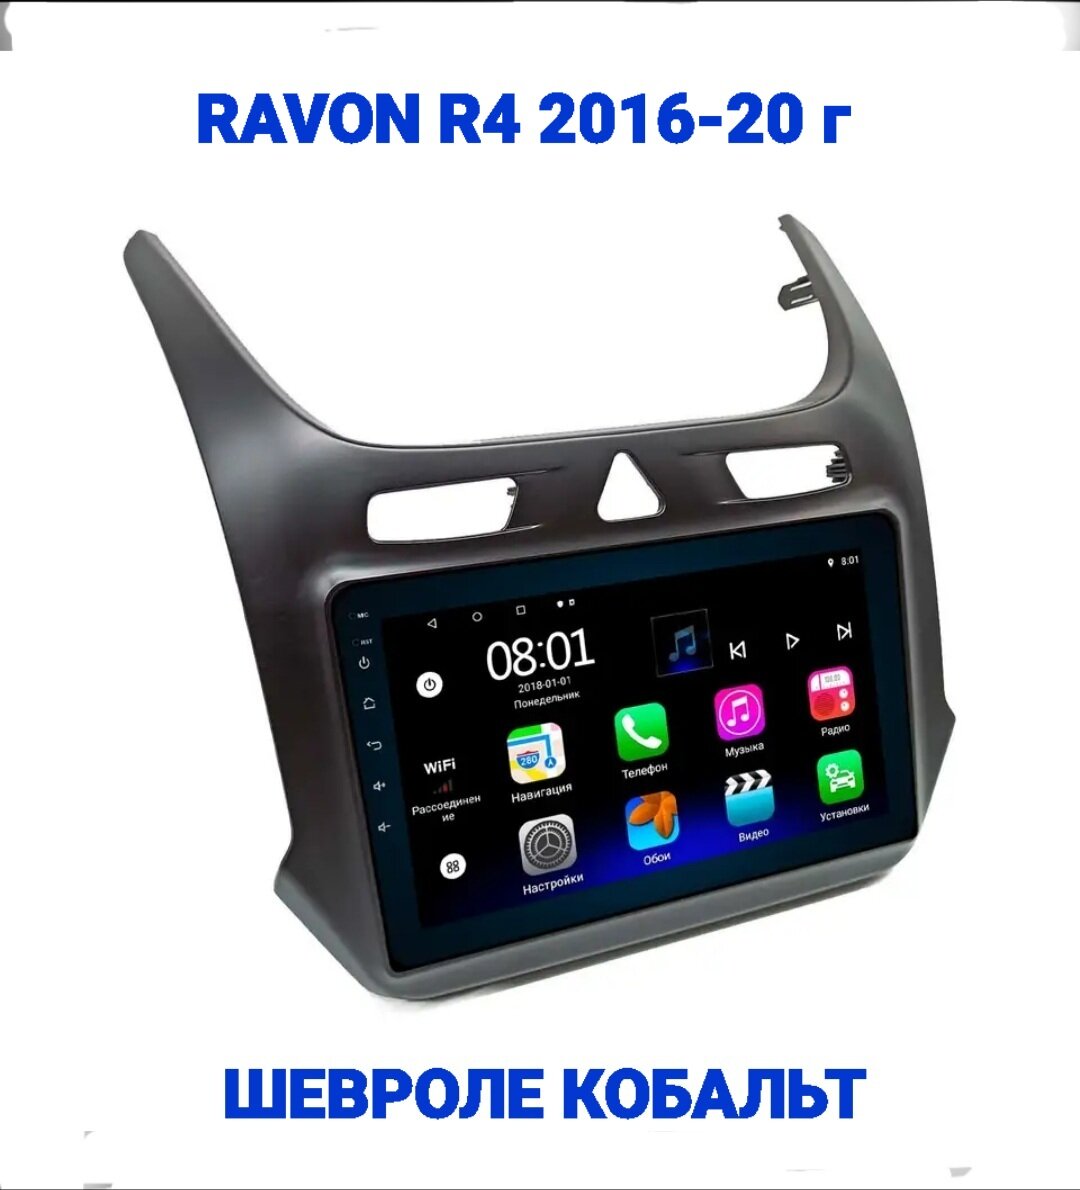 Магнитола WiFi, GPS, USB, Блютуз, андроид 13, для Шевроле Кобальт; Равон R4 (Chevrolet Cobalt 2016-19; Ravon R4 2016-20)